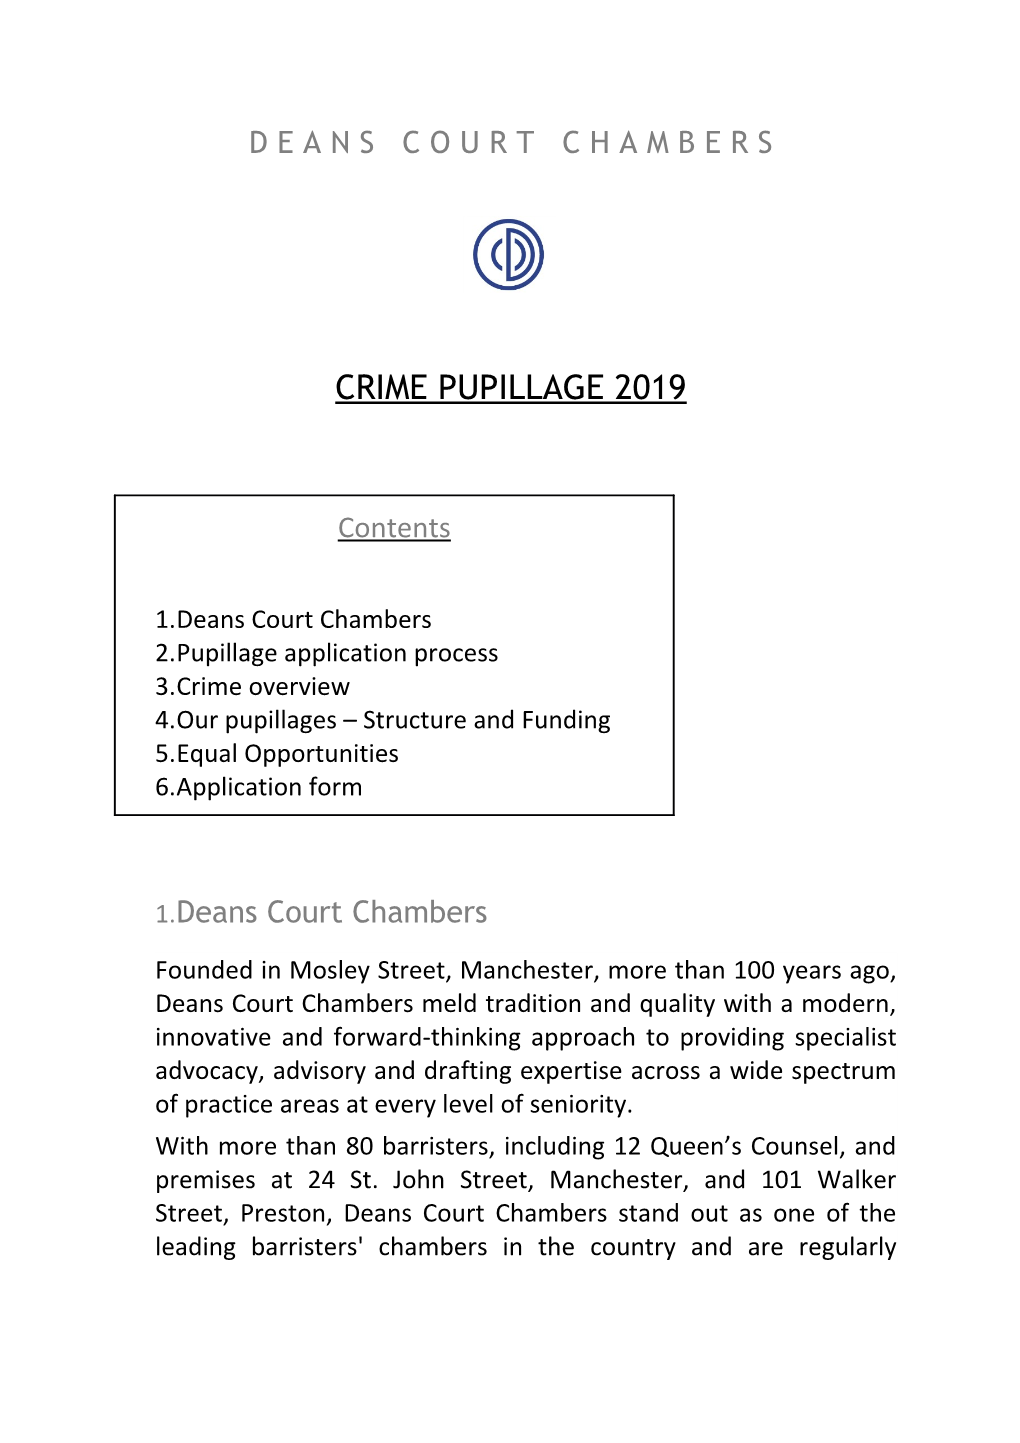 Crime Pupillage 2019